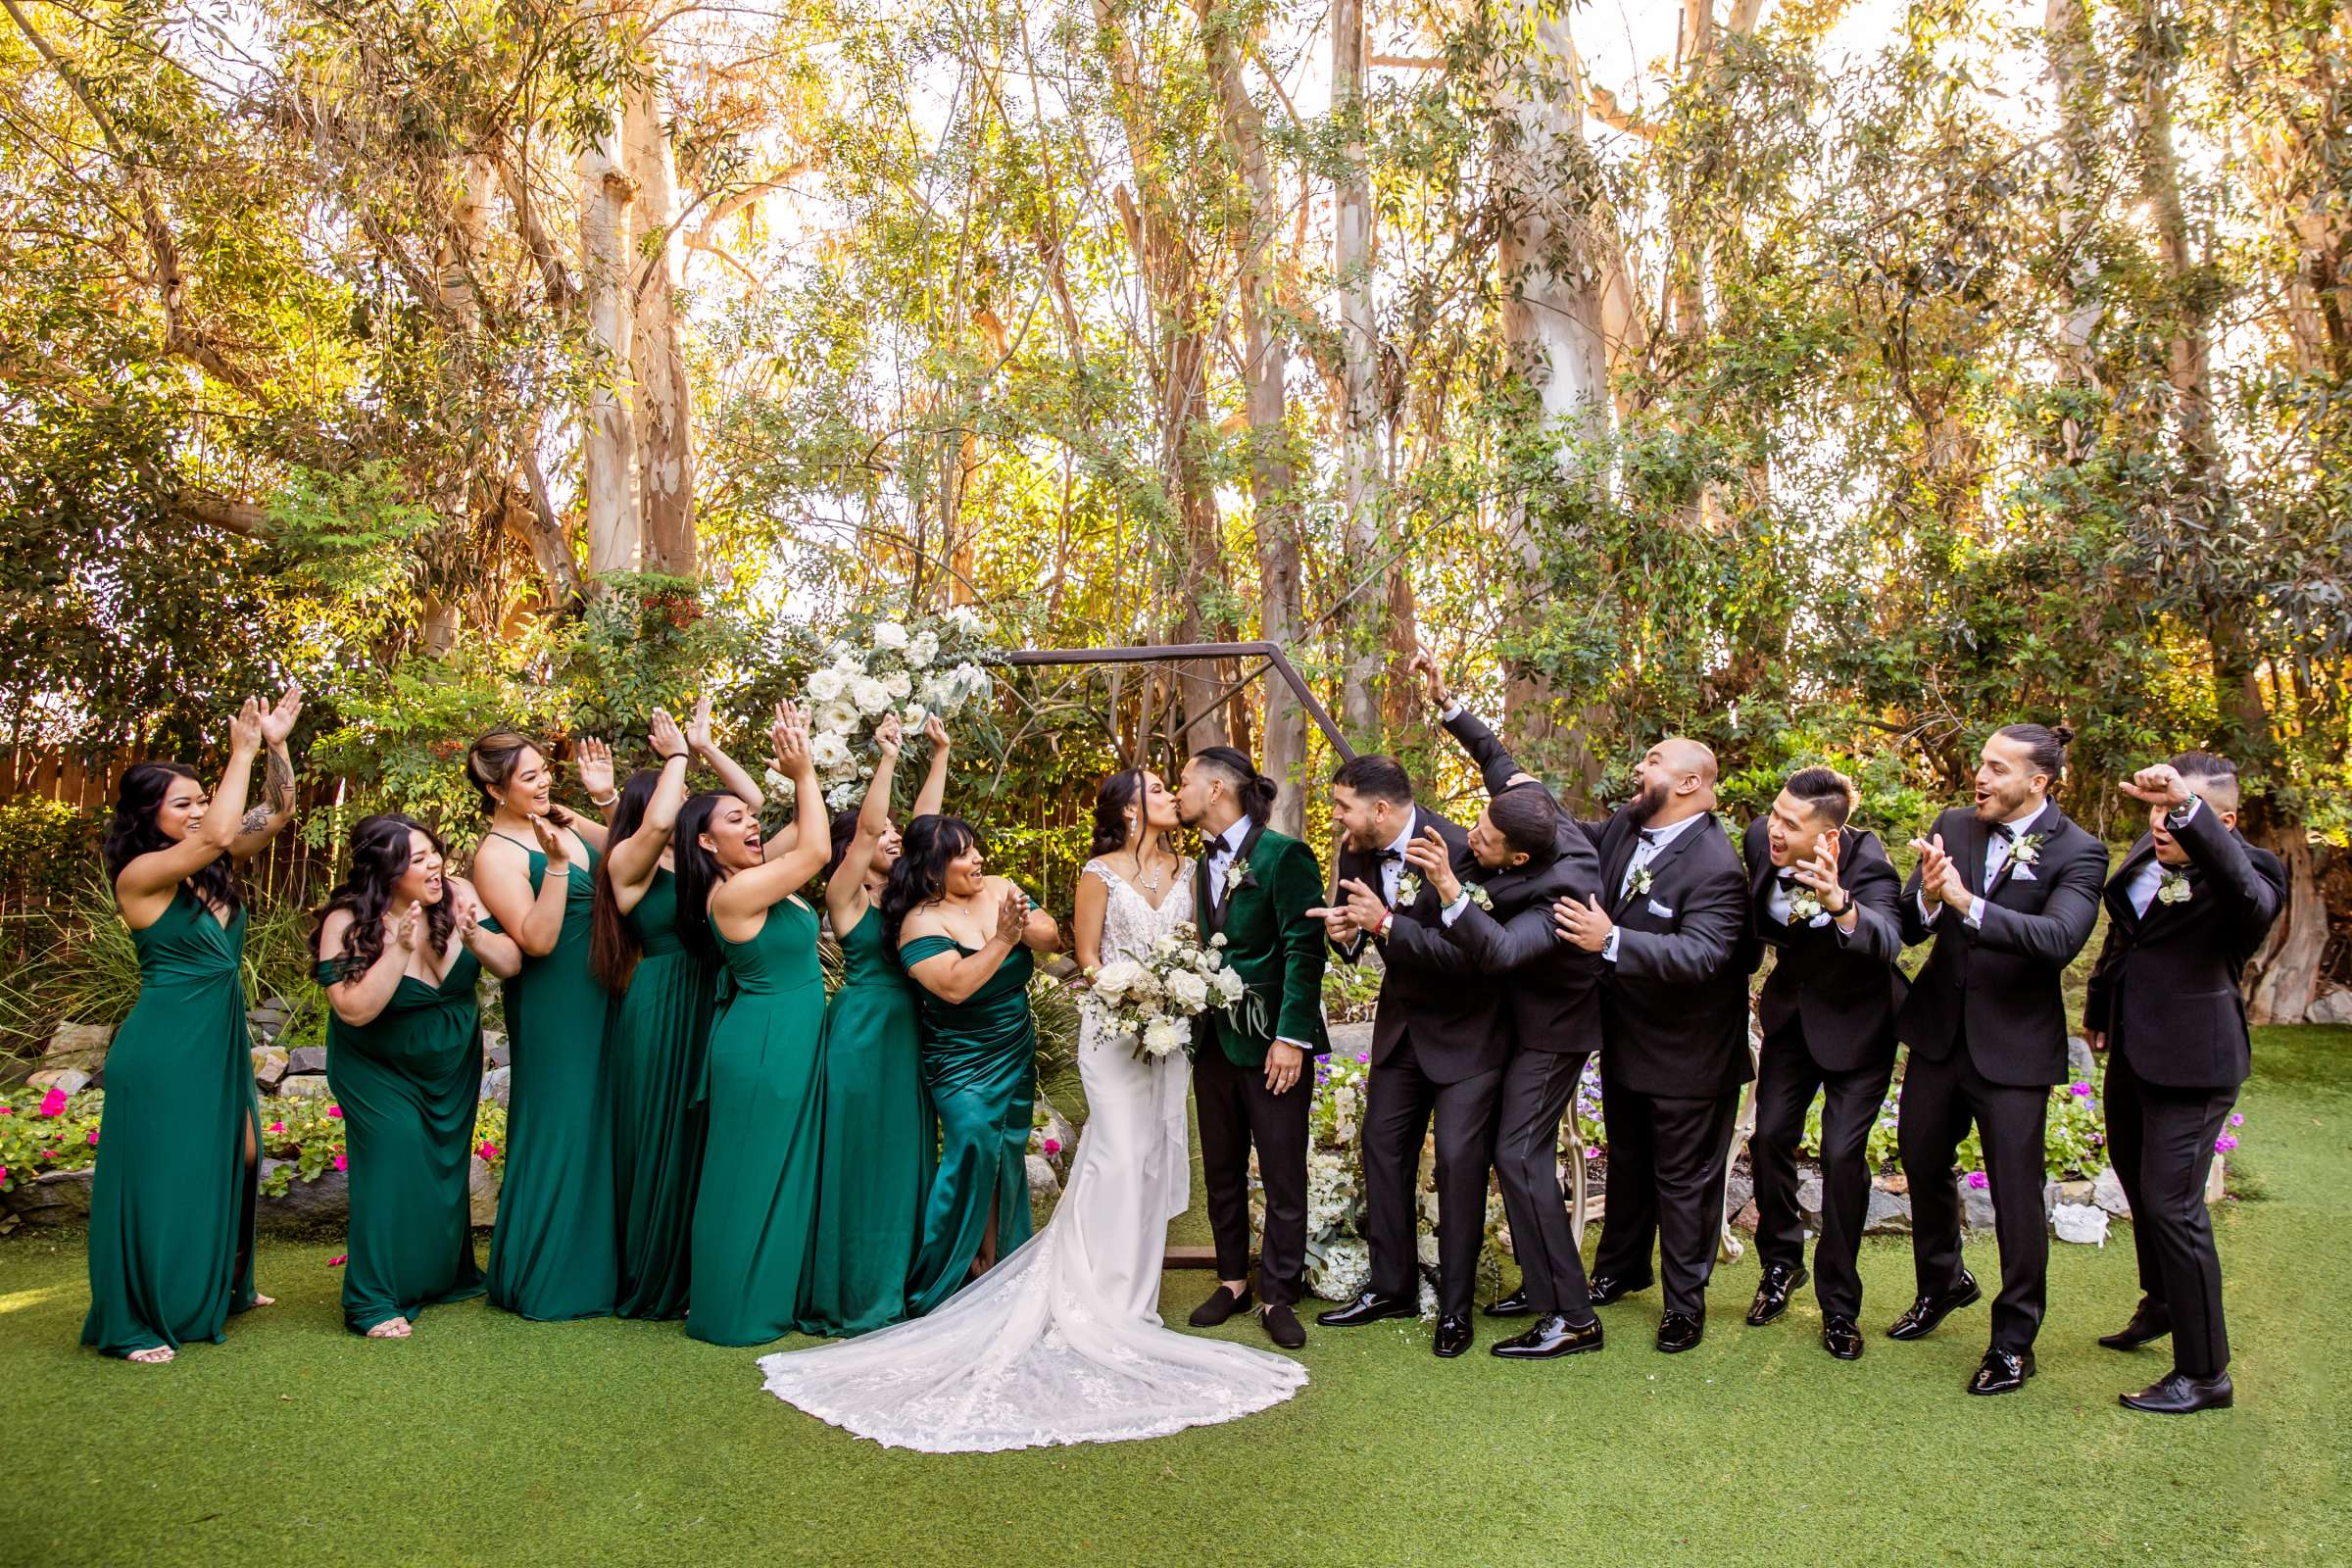 Twin Oaks House & Gardens Wedding Estate Wedding, Lottiesha and Christian Wedding Photo #42 by True Photography